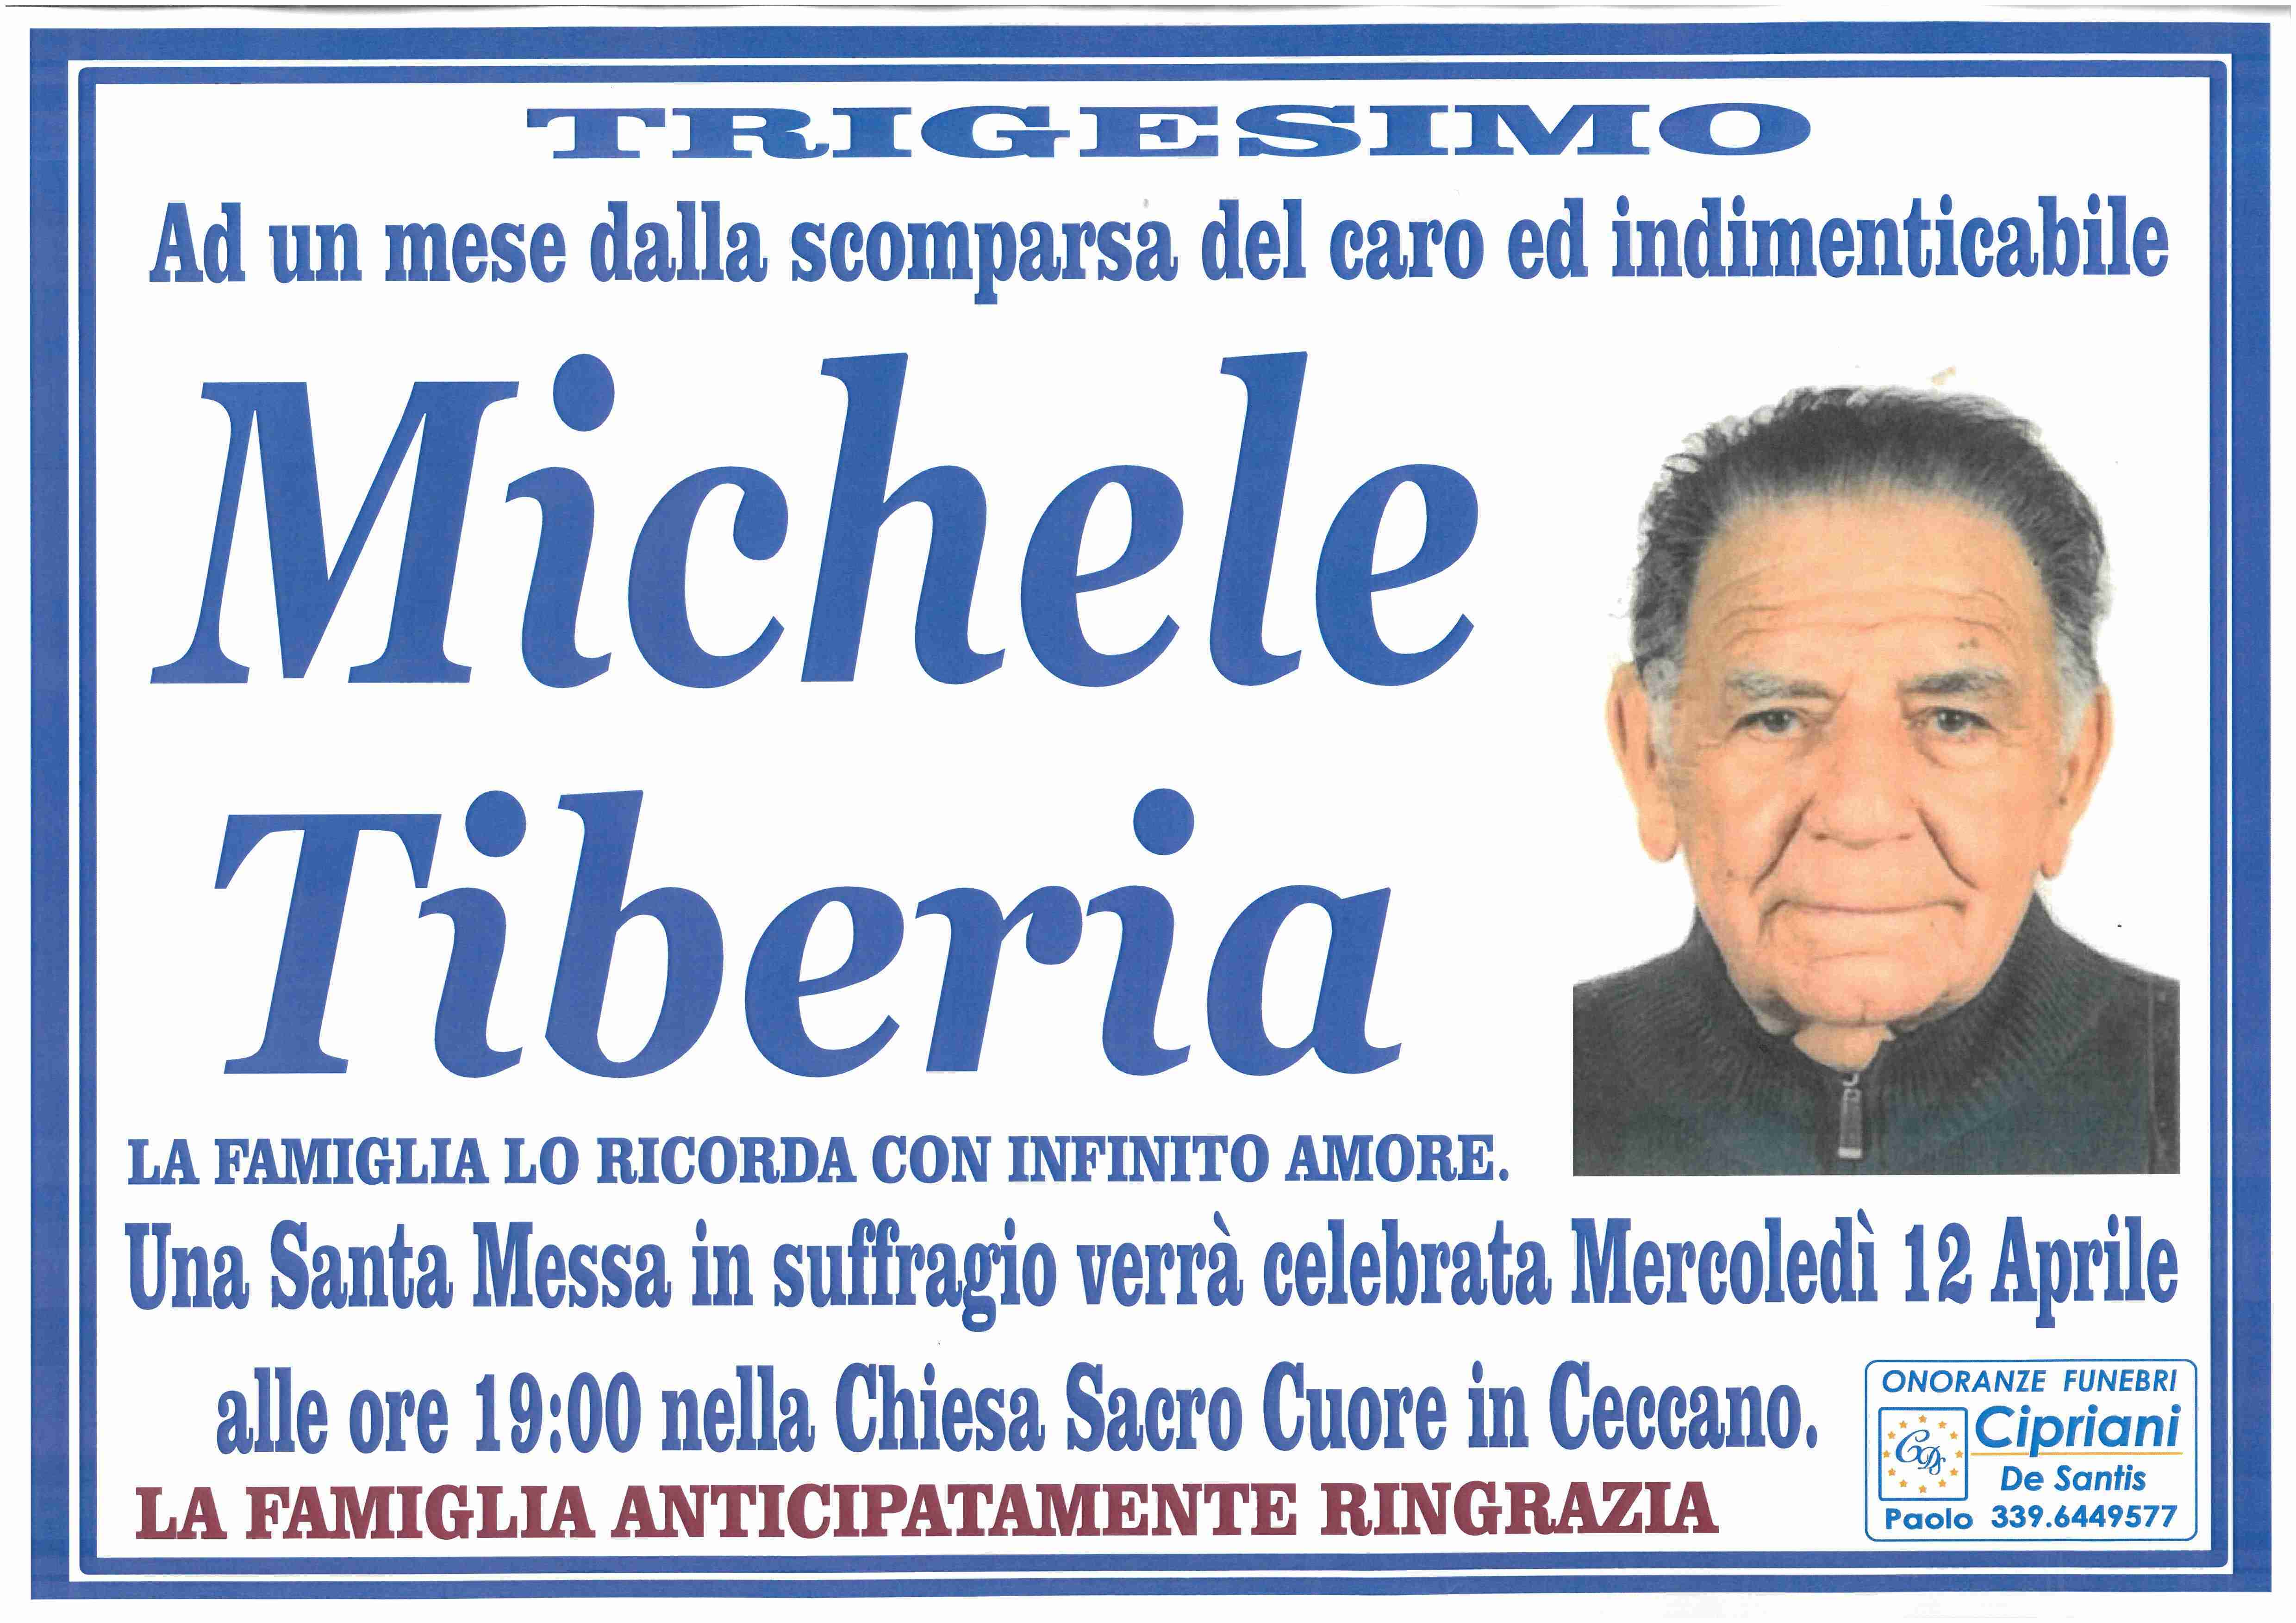 Michele Tiberia